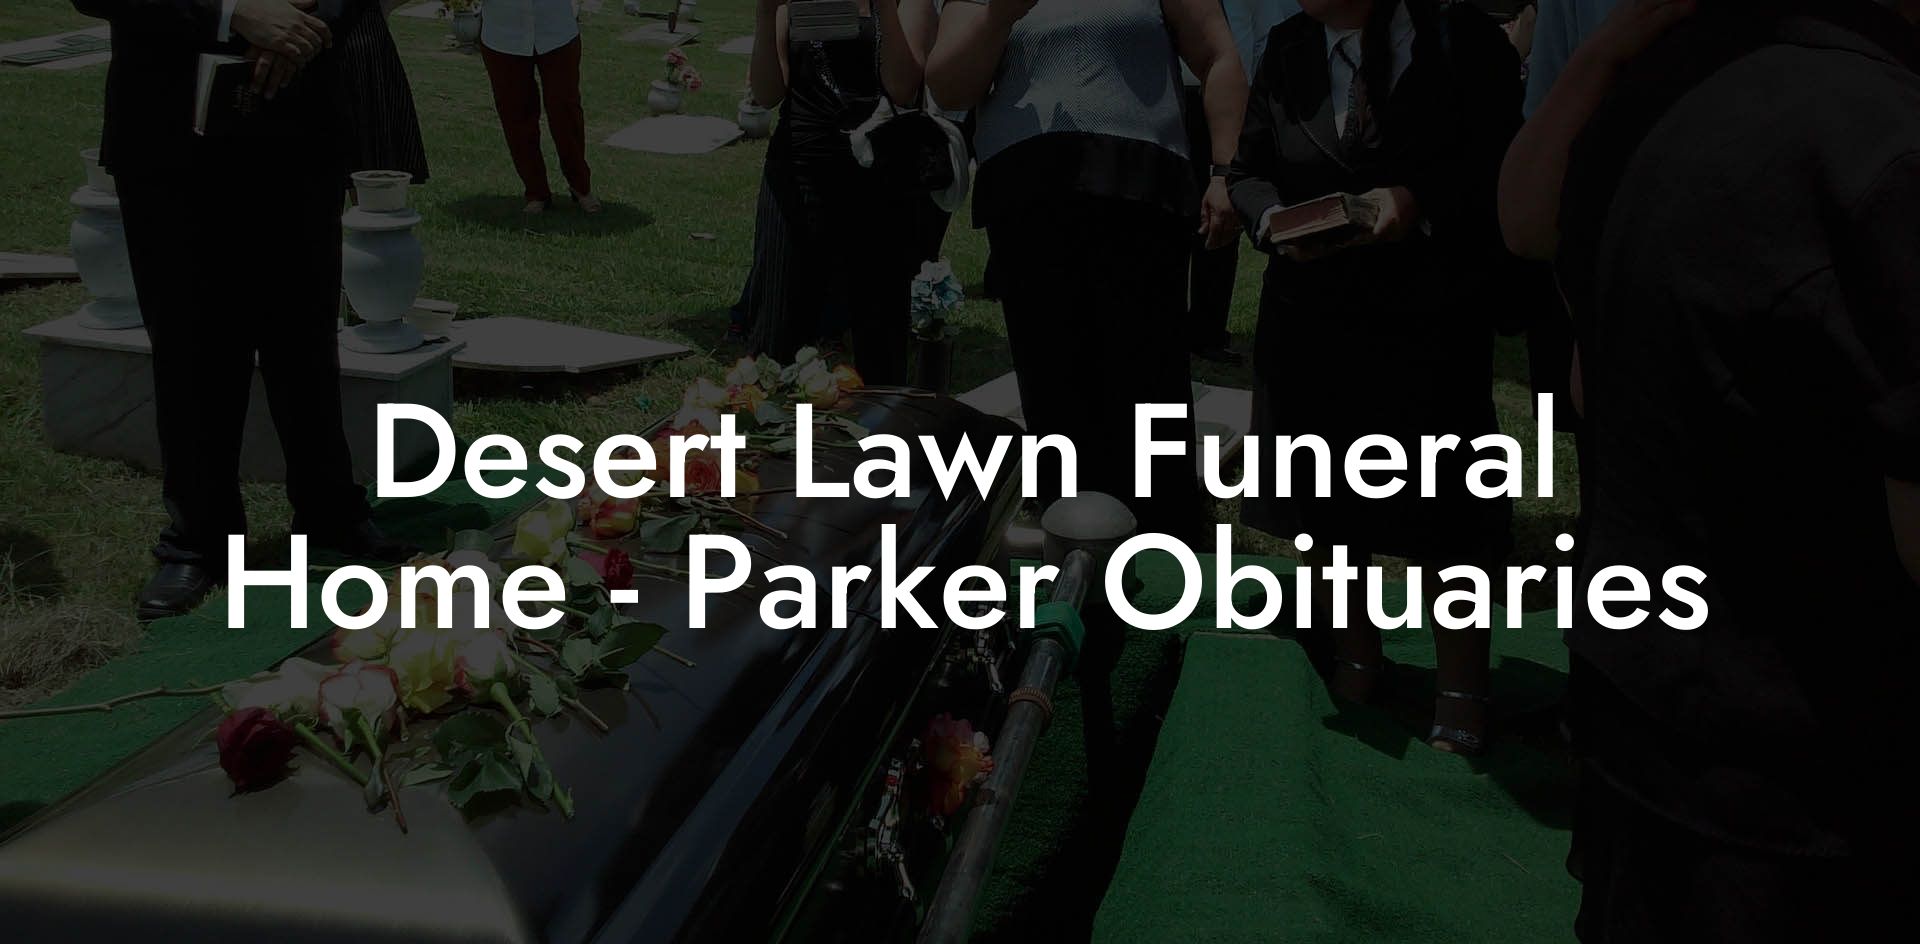 Desert Lawn Funeral Home - Parker Obituaries